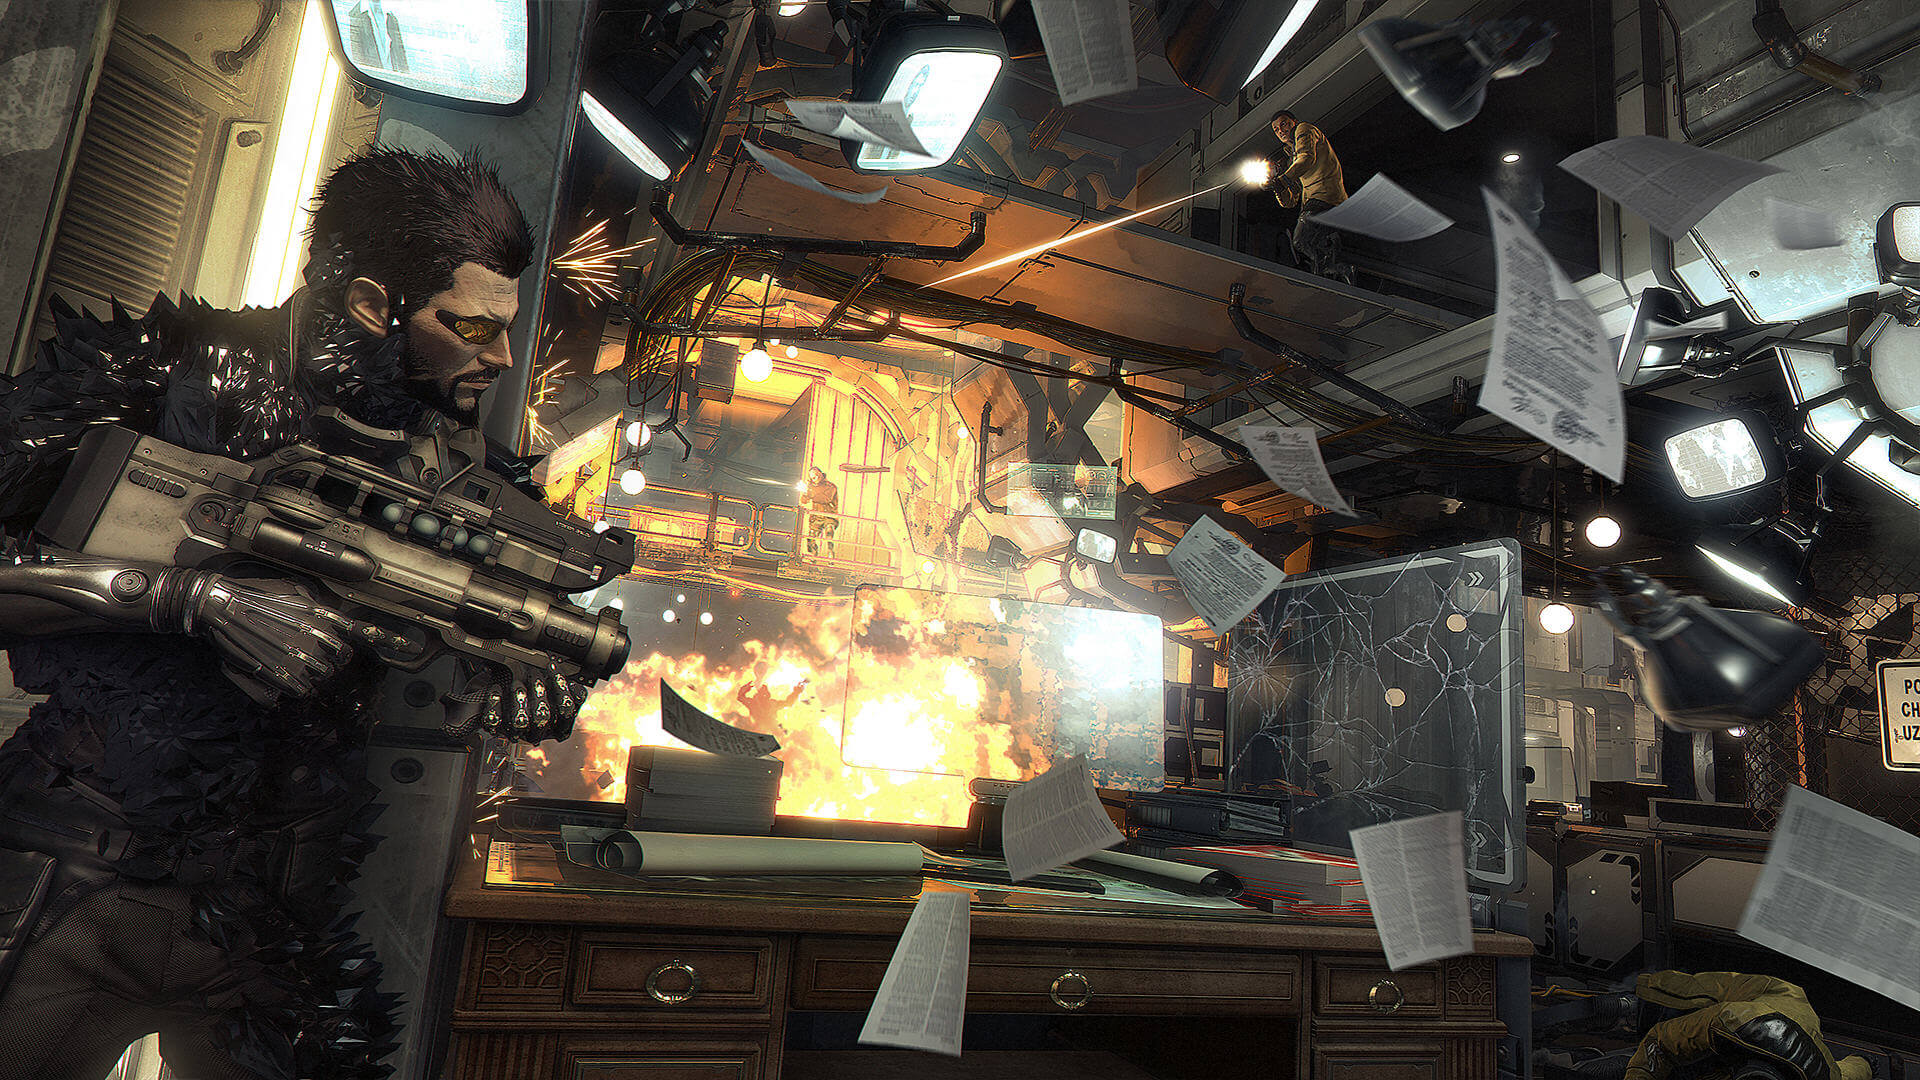 Download mobile wallpaper Video Game, Deus Ex, Adam Jensen, Deus Ex: Mankind Divided for free.